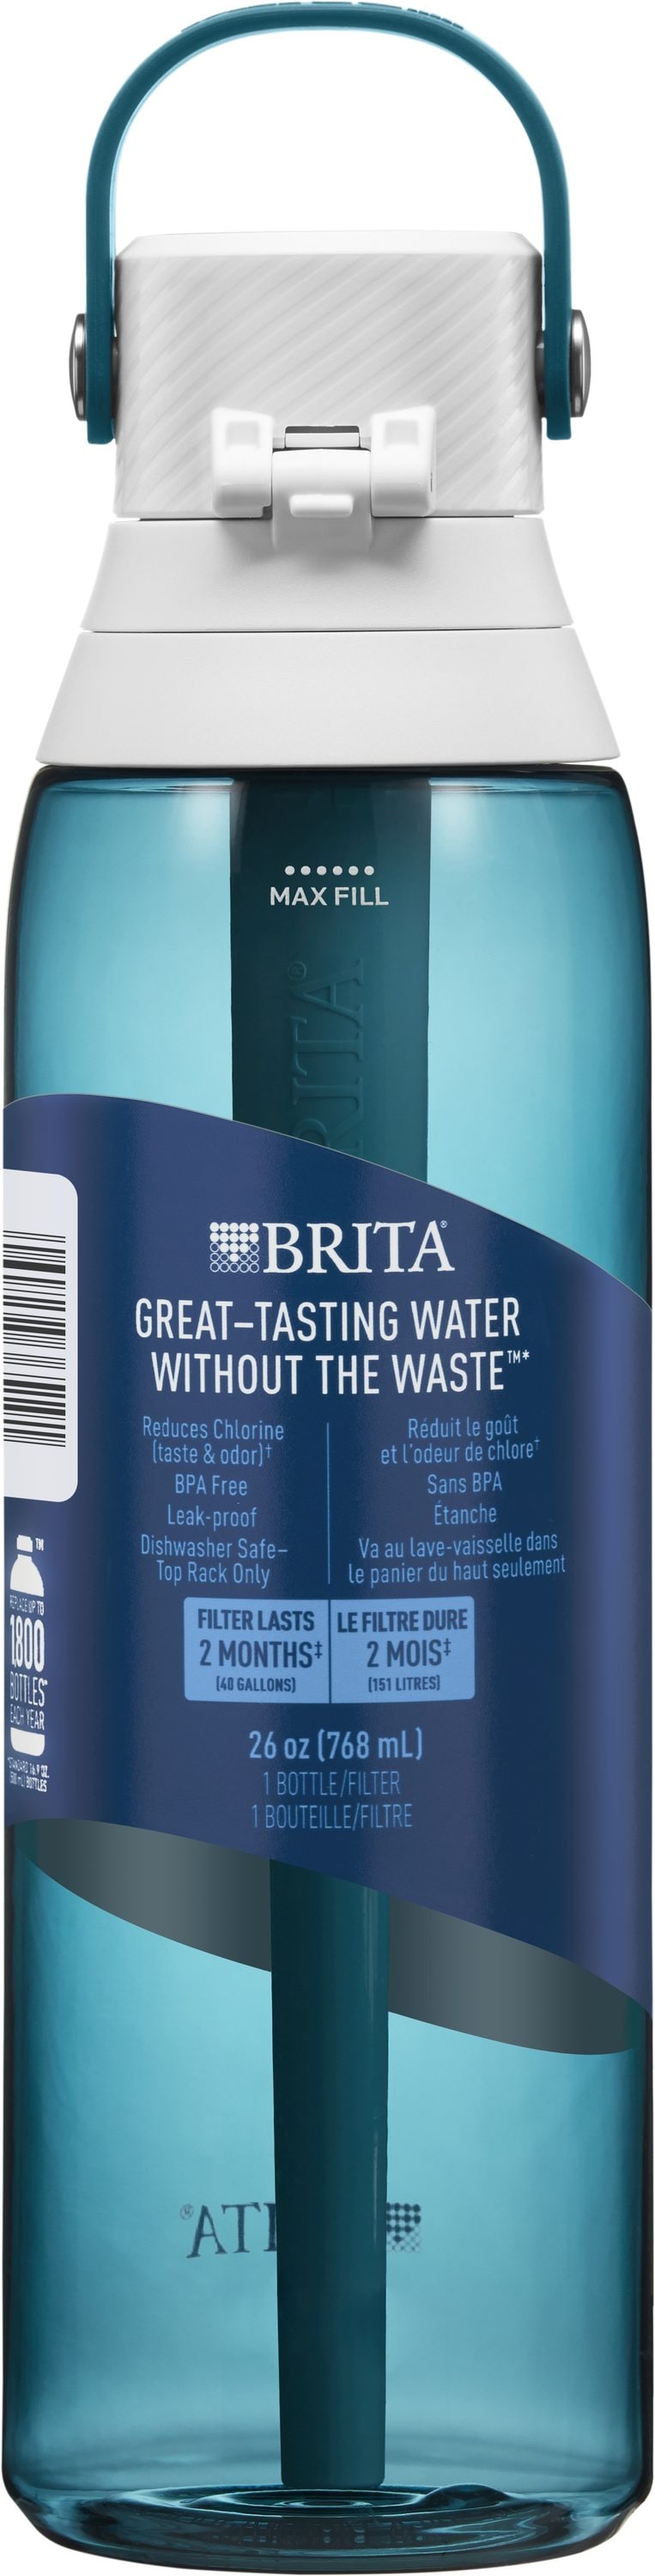 Brita Premium 26oz Filtering Water Bottle With Filter - Seaglass